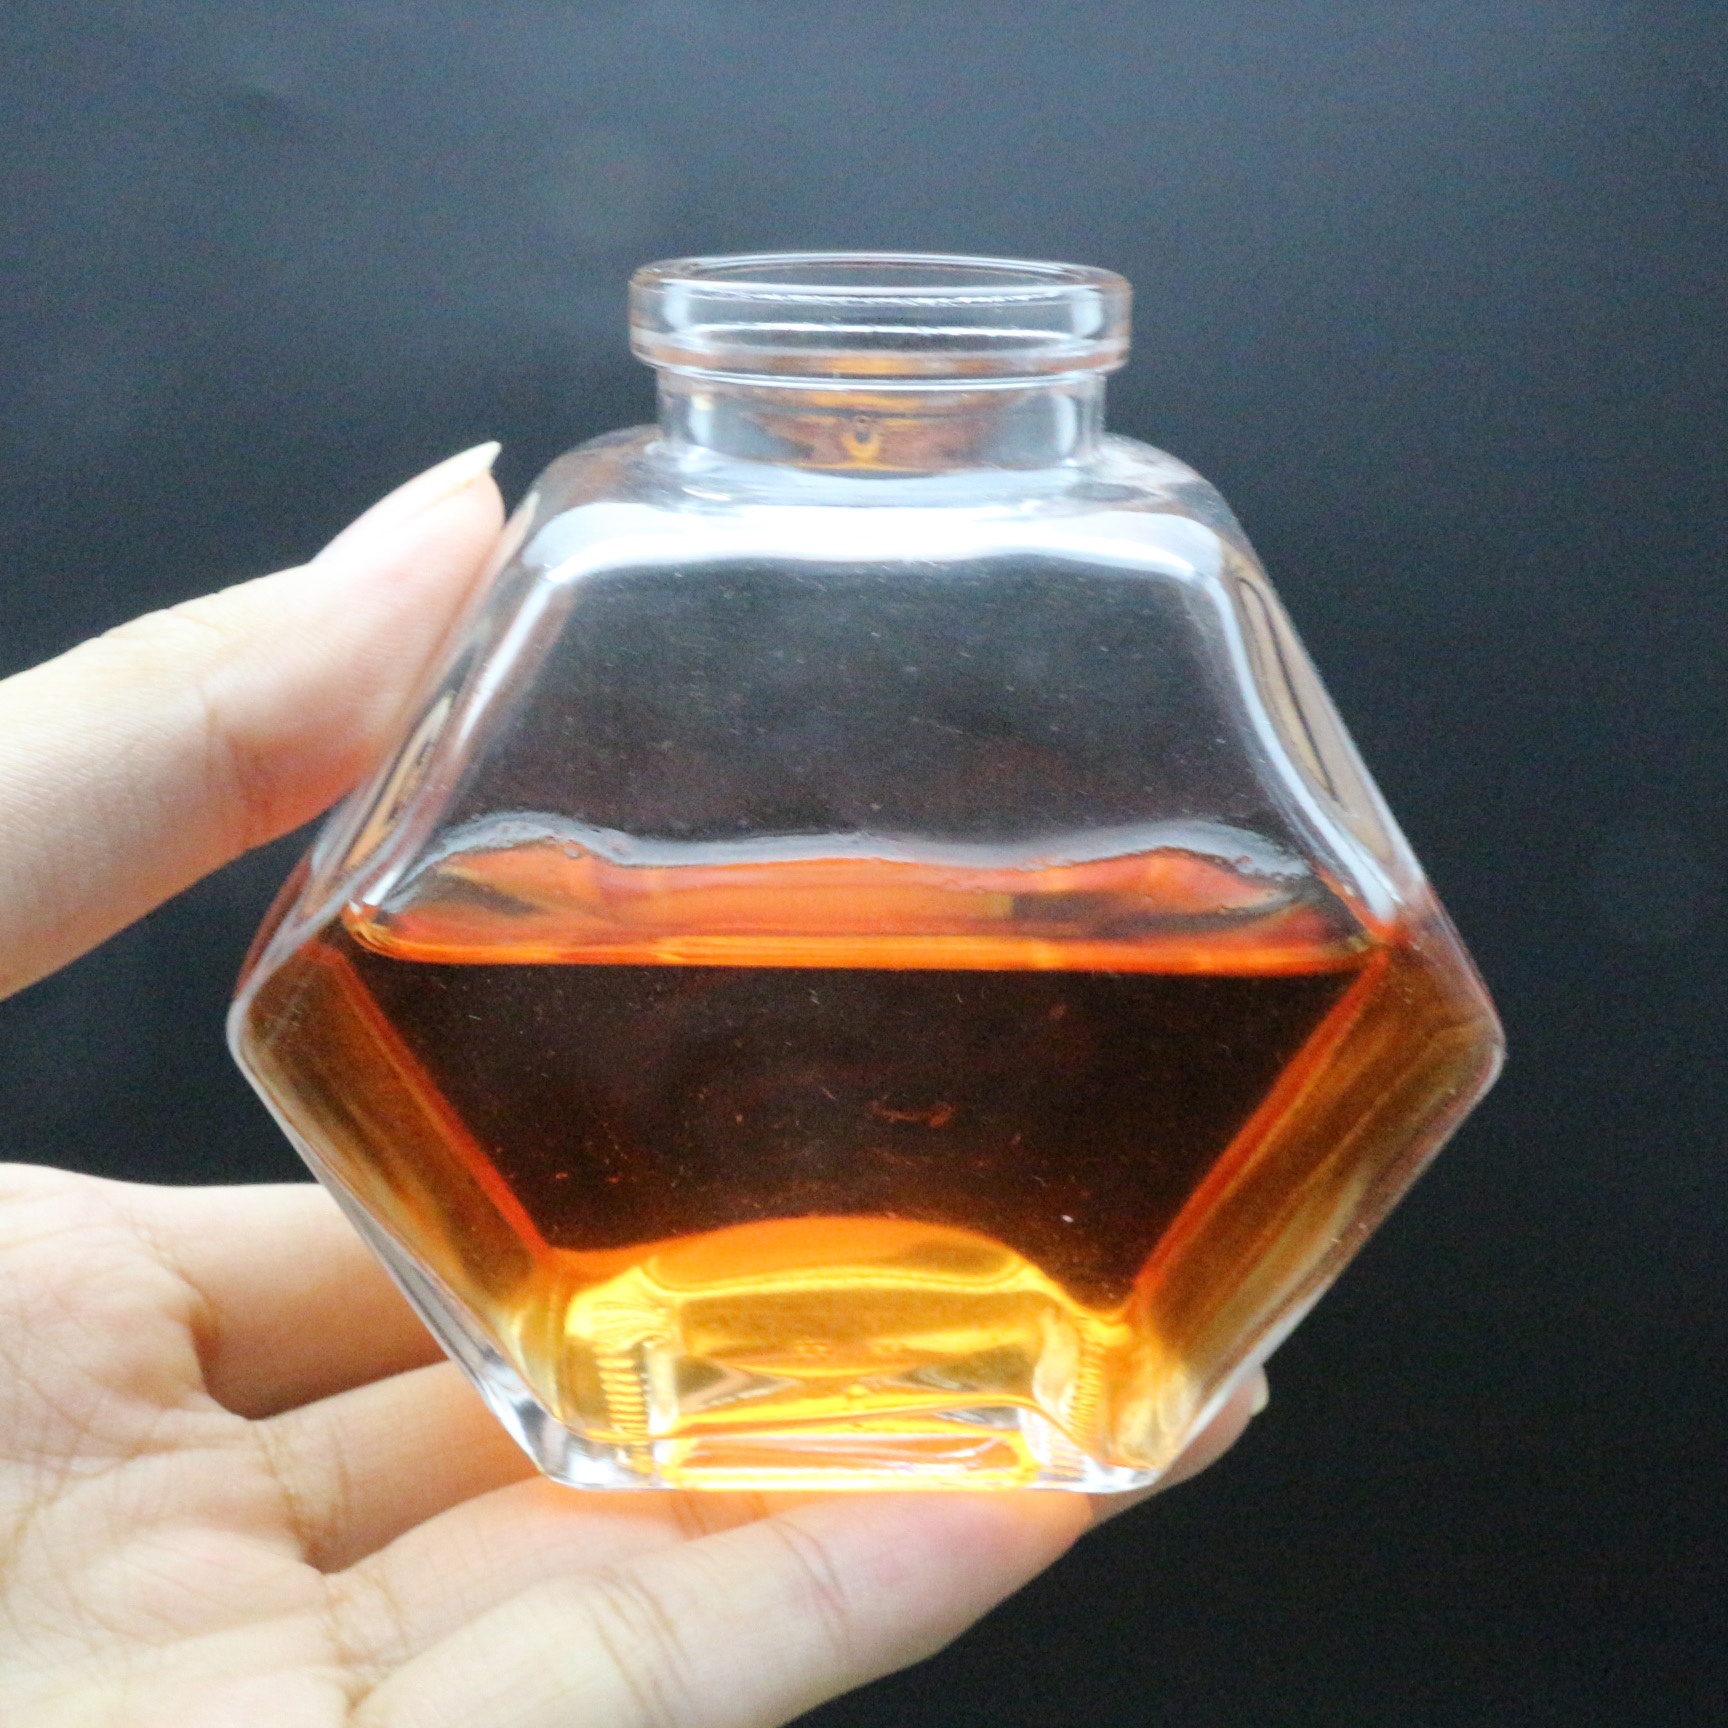 Exclusive glass jar packaging honey 8 oz glass jar wooden lid 250g